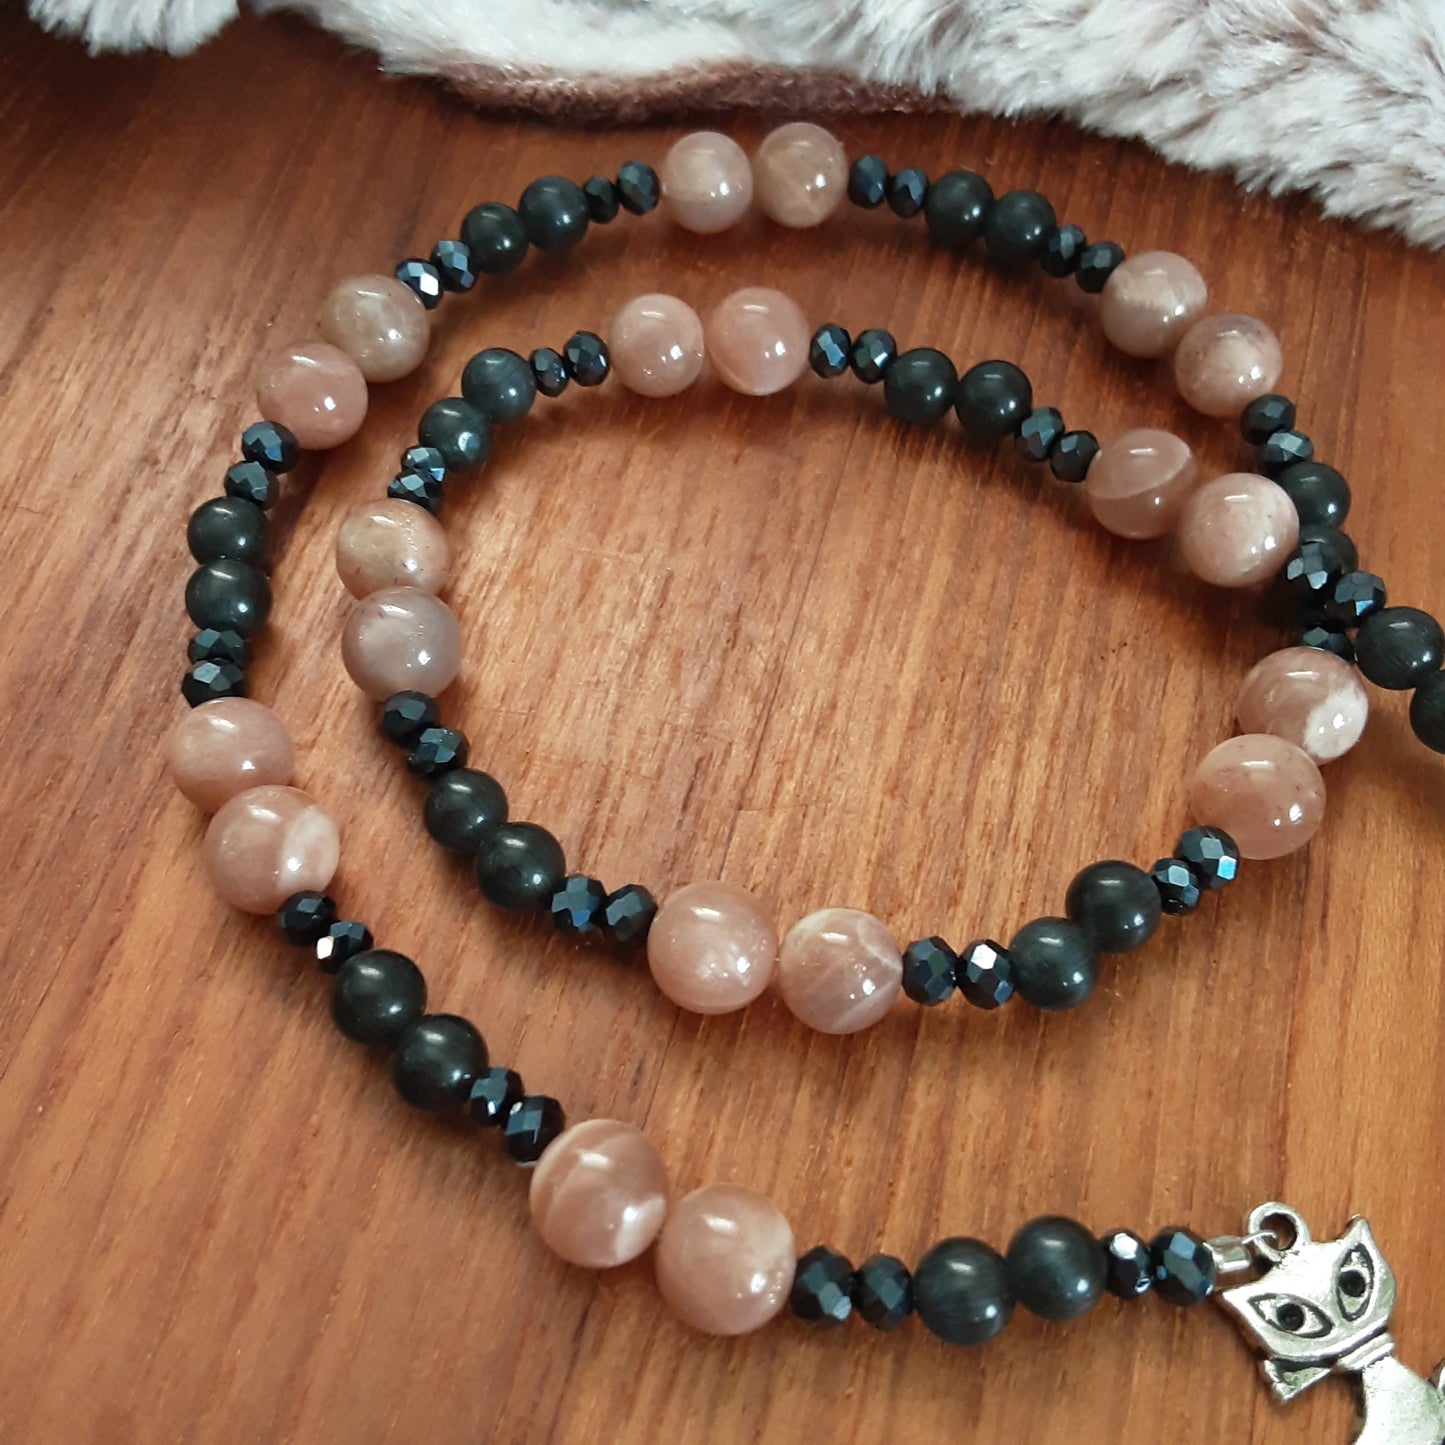 Bast prayer beads